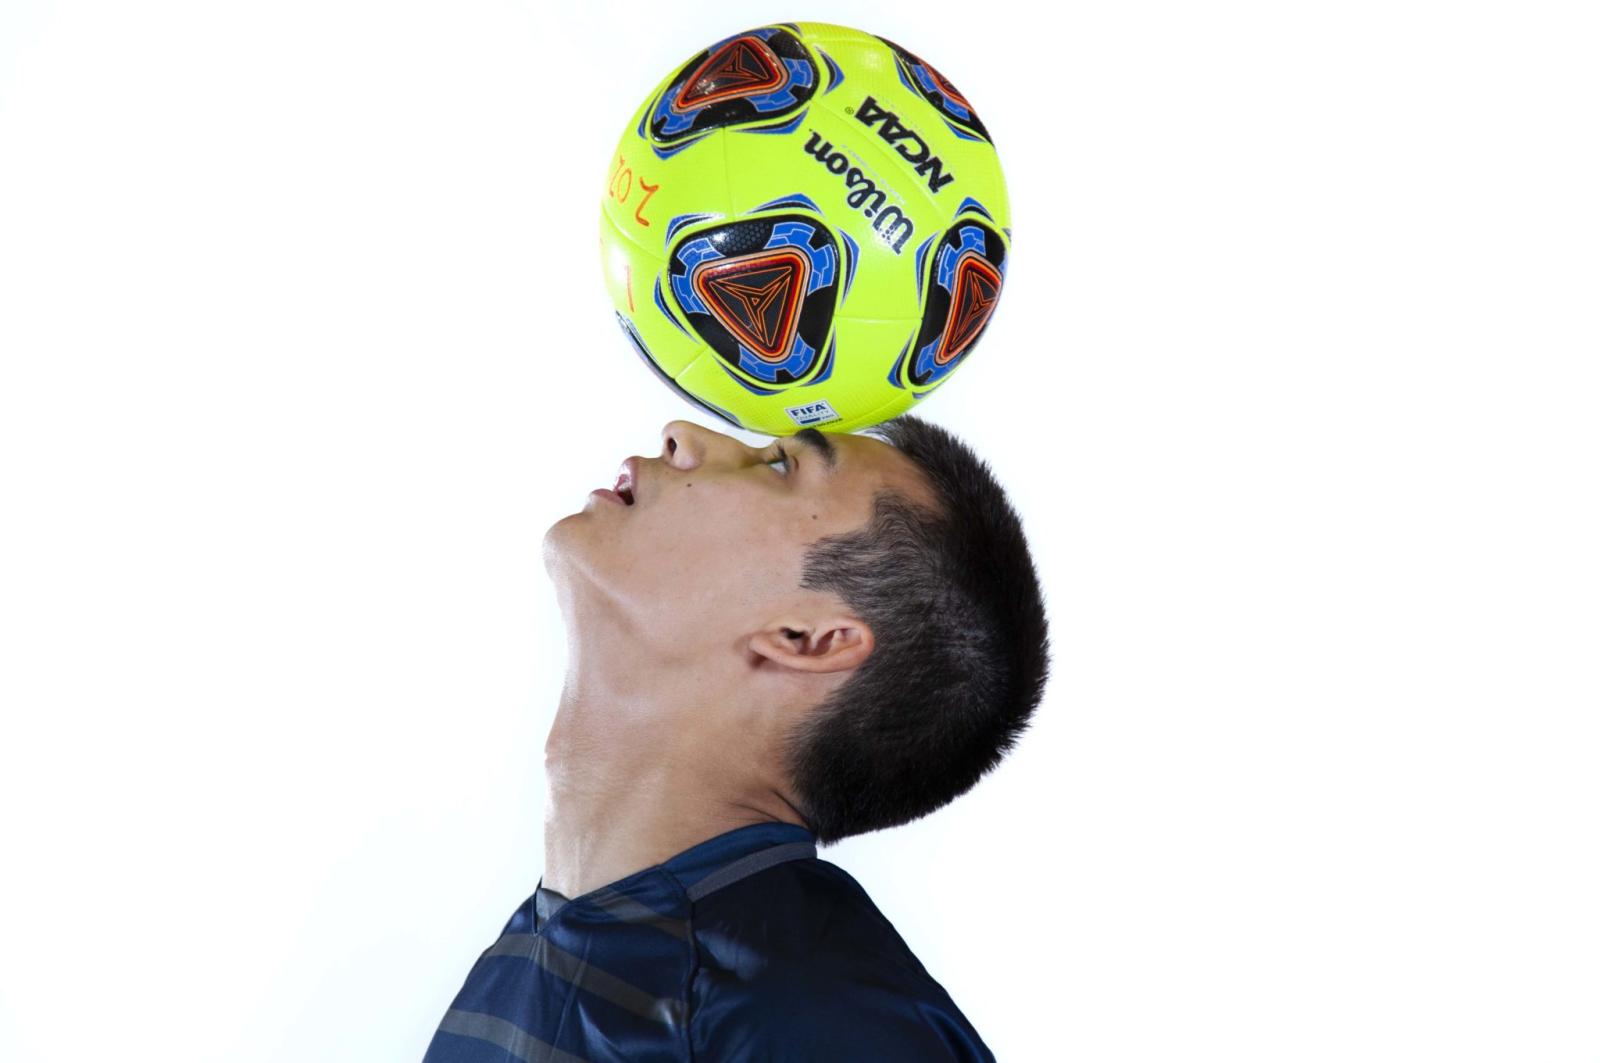 Soccer player Elliot Mueller balances a soccer ball on his forehead